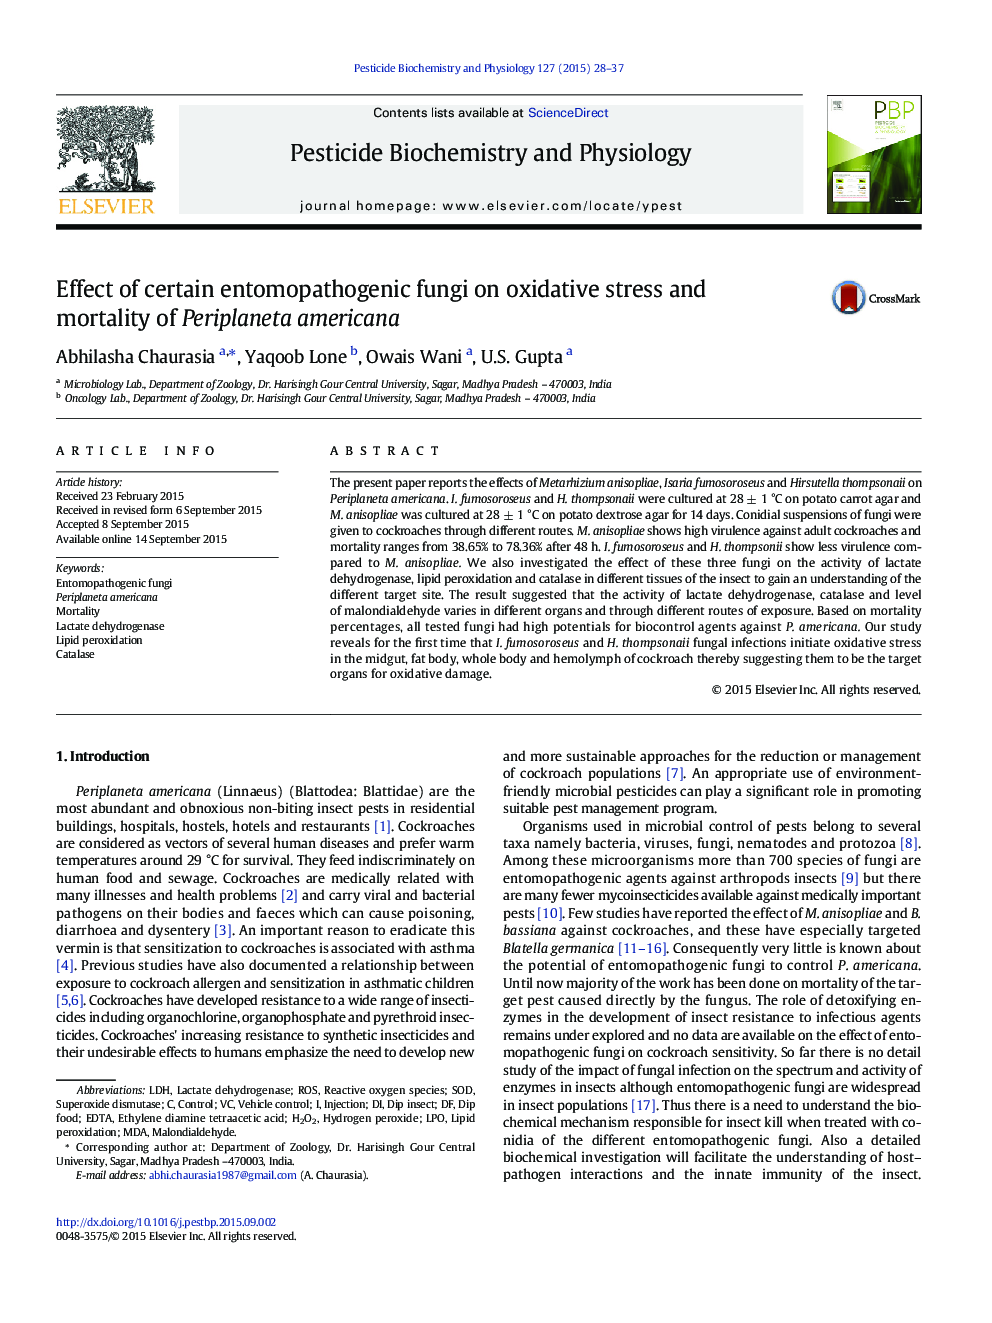 Effect of certain entomopathogenic fungi on oxidative stress and mortality of Periplaneta americana